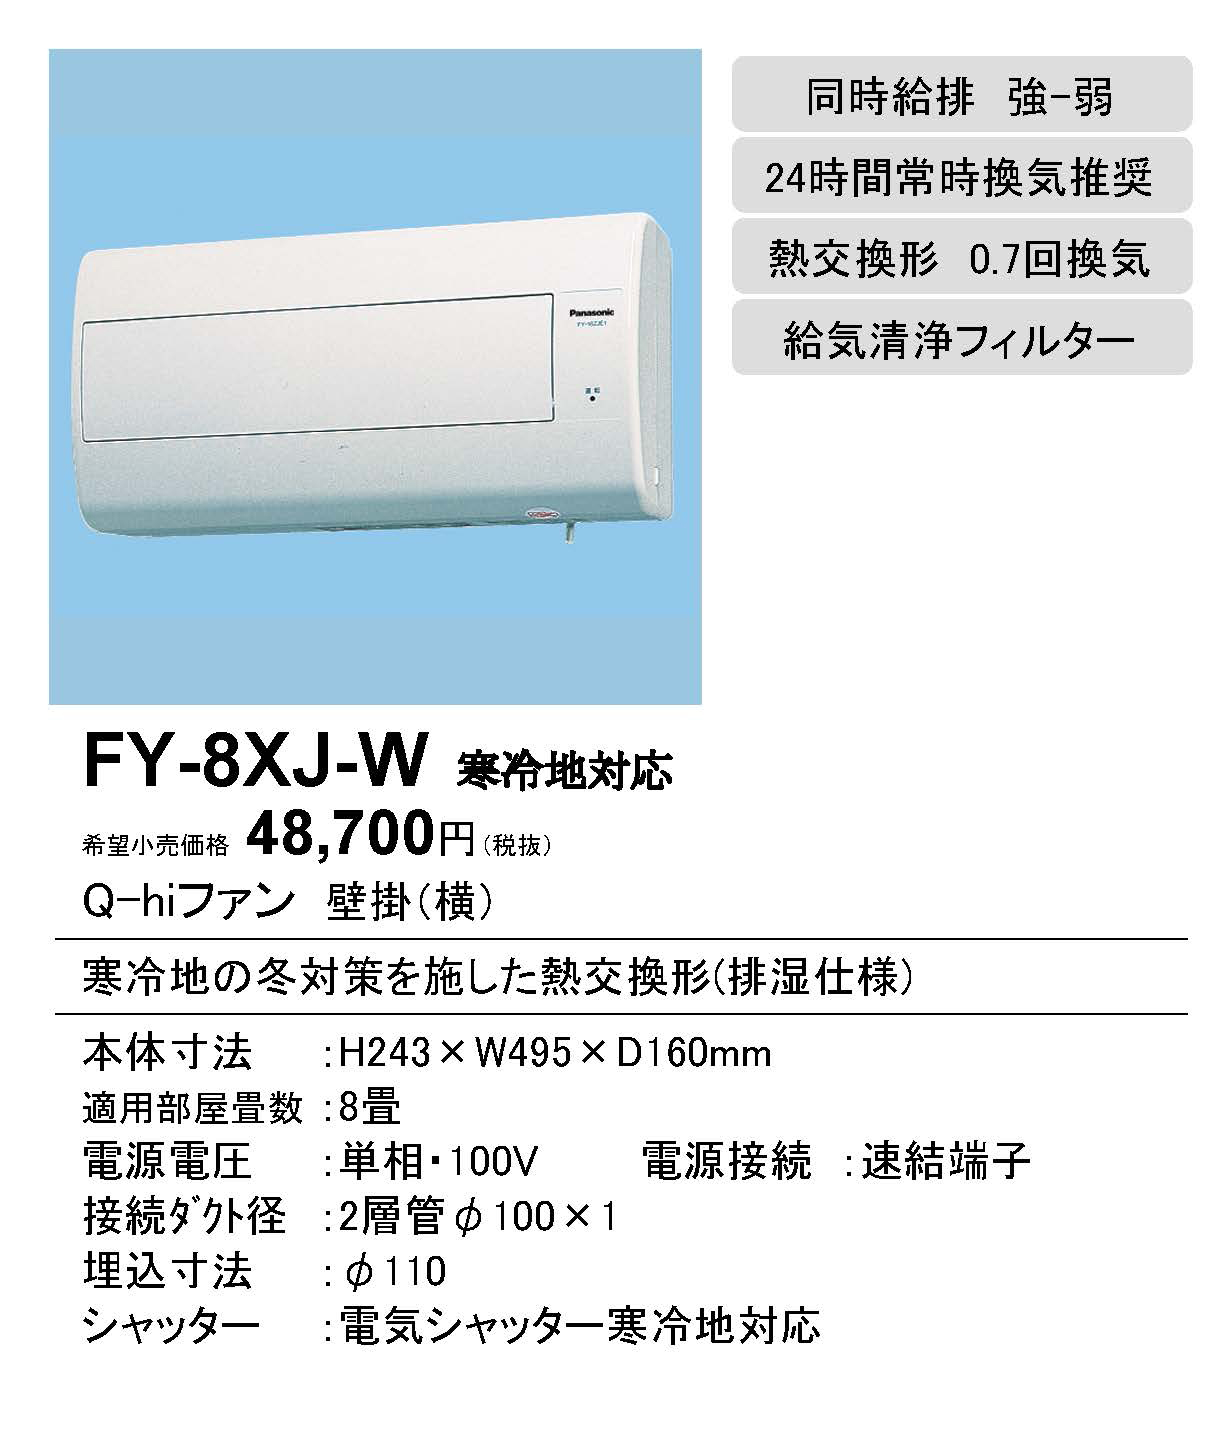 FY-8XJ-W | 換気扇 | パナソニック Panasonic Q-hiファン壁掛形・1 